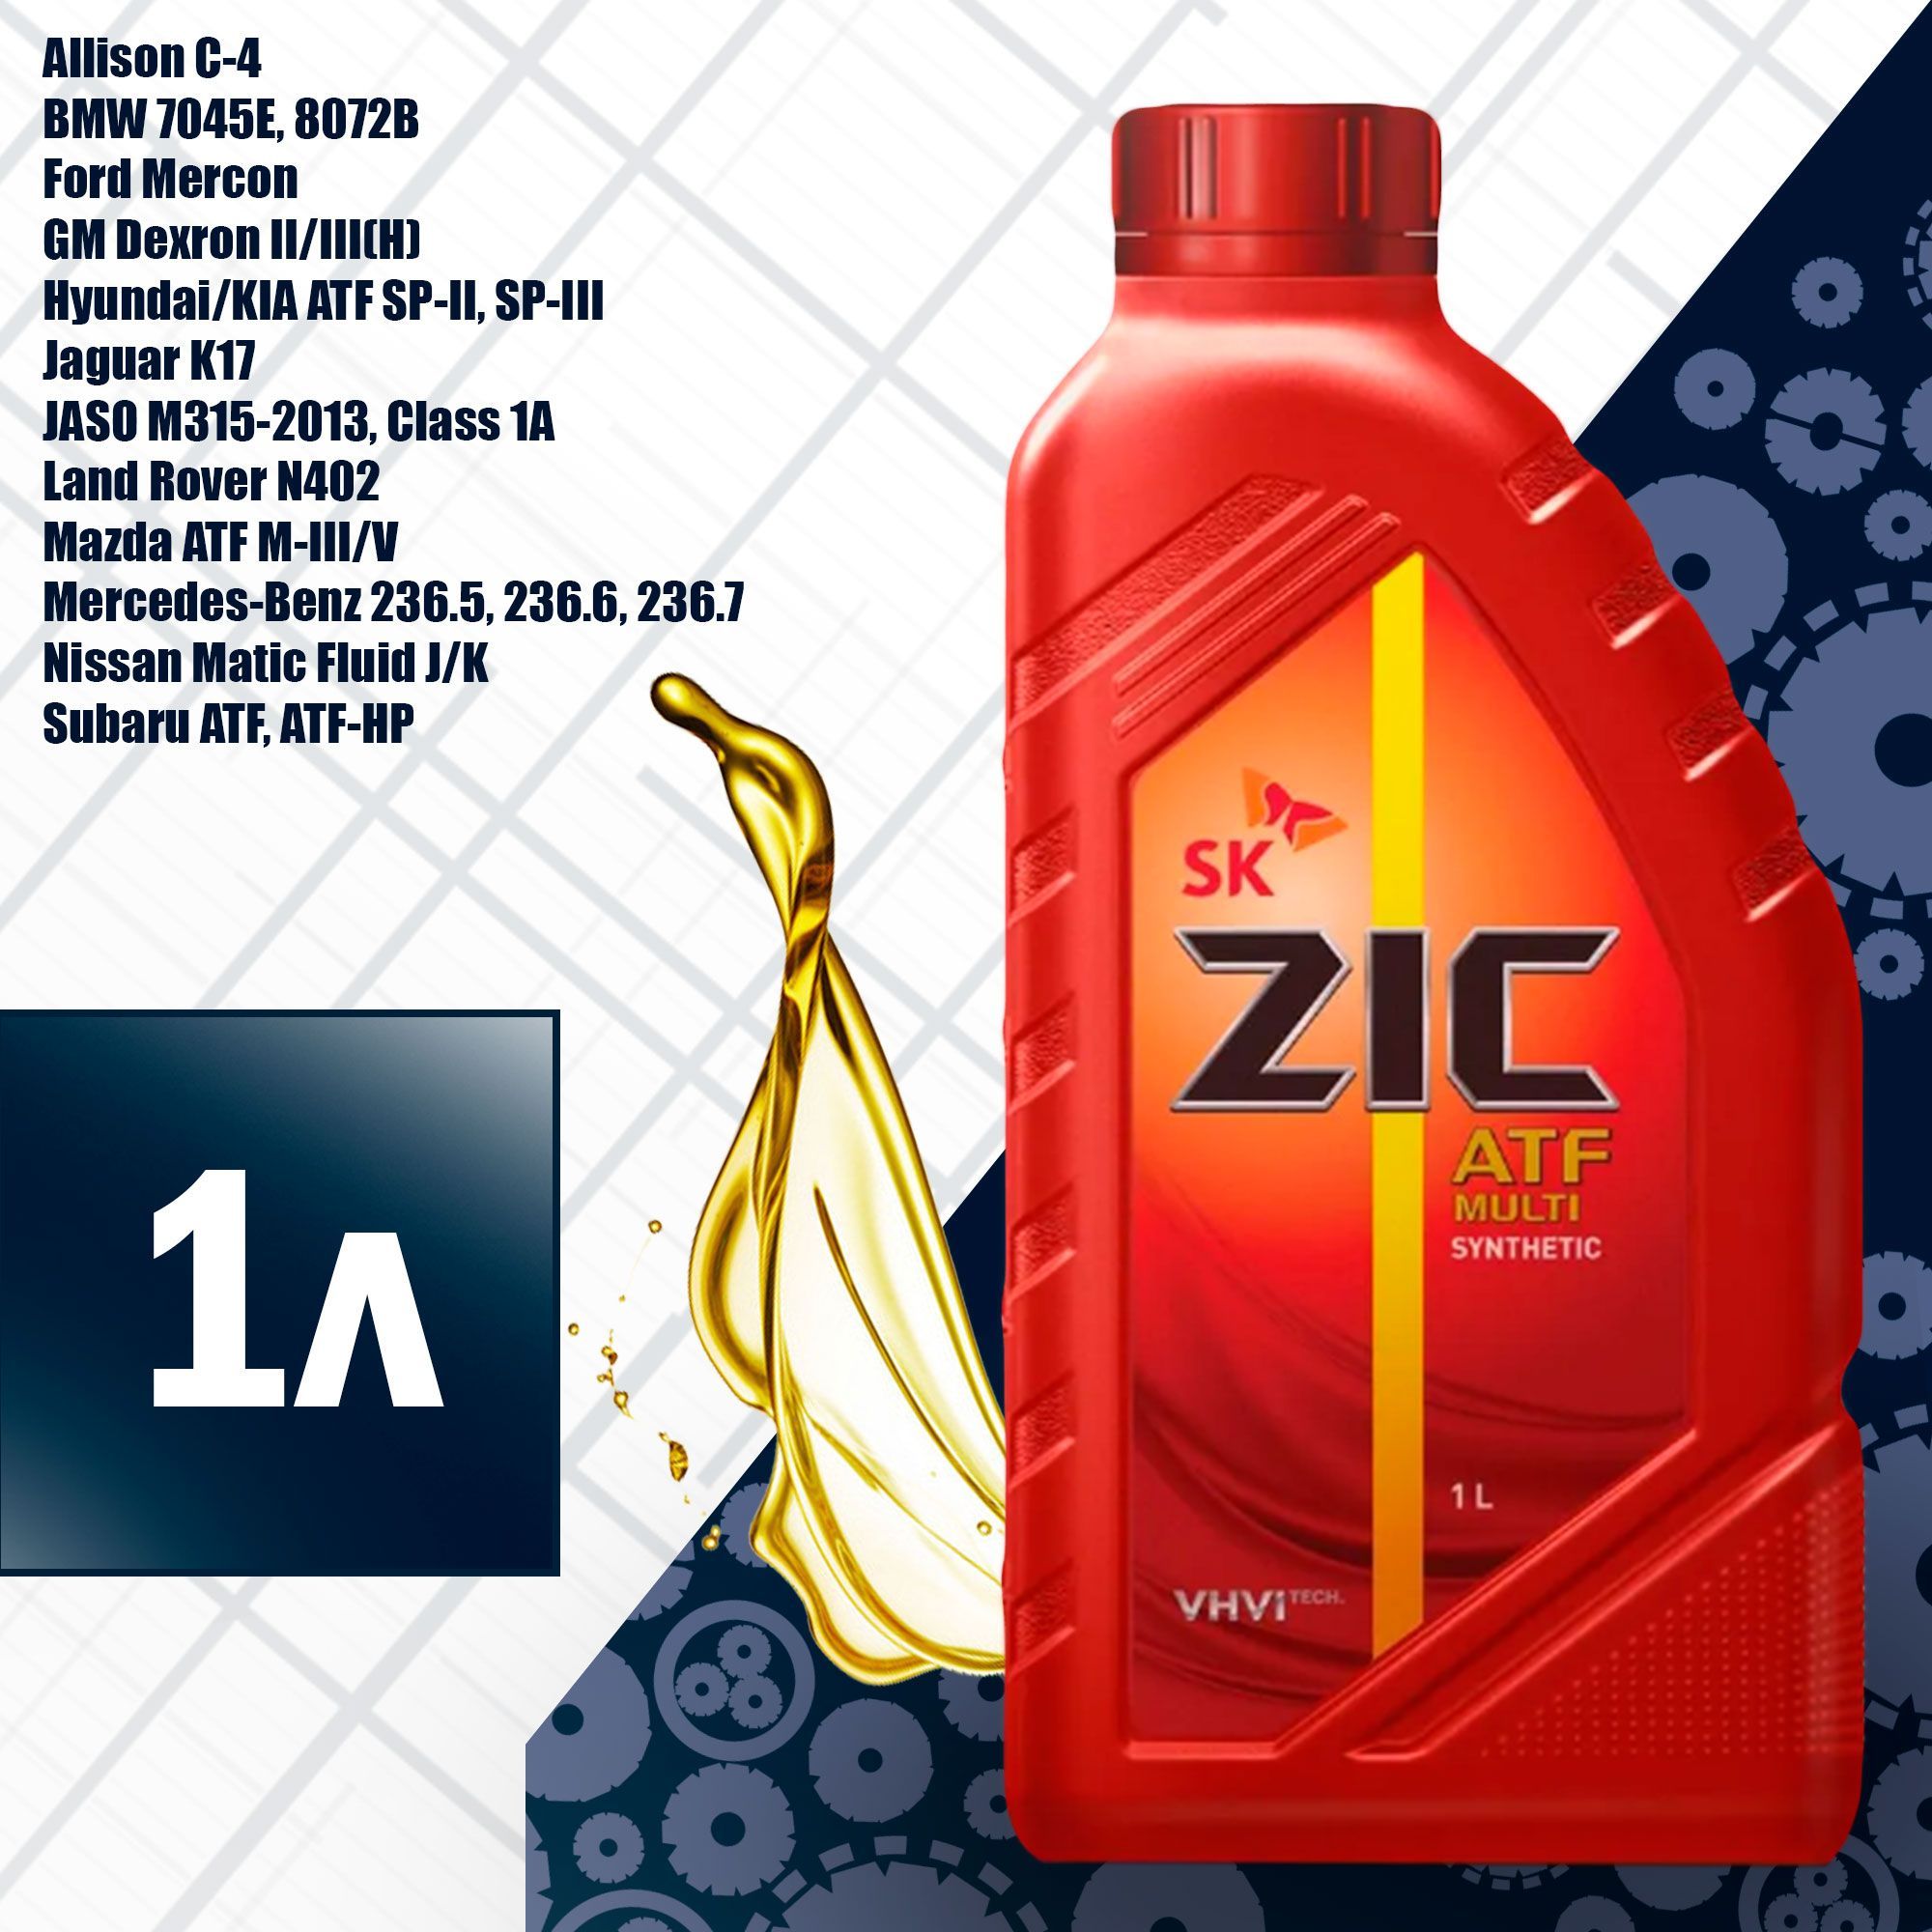 Zic atf multi купить. ZIC ATF Multi Synthetic. ZIC ATF Multi цвет жидкости. ZIC ATF Multi какого цвета. ZIC ATF Multi (1л) 132628.